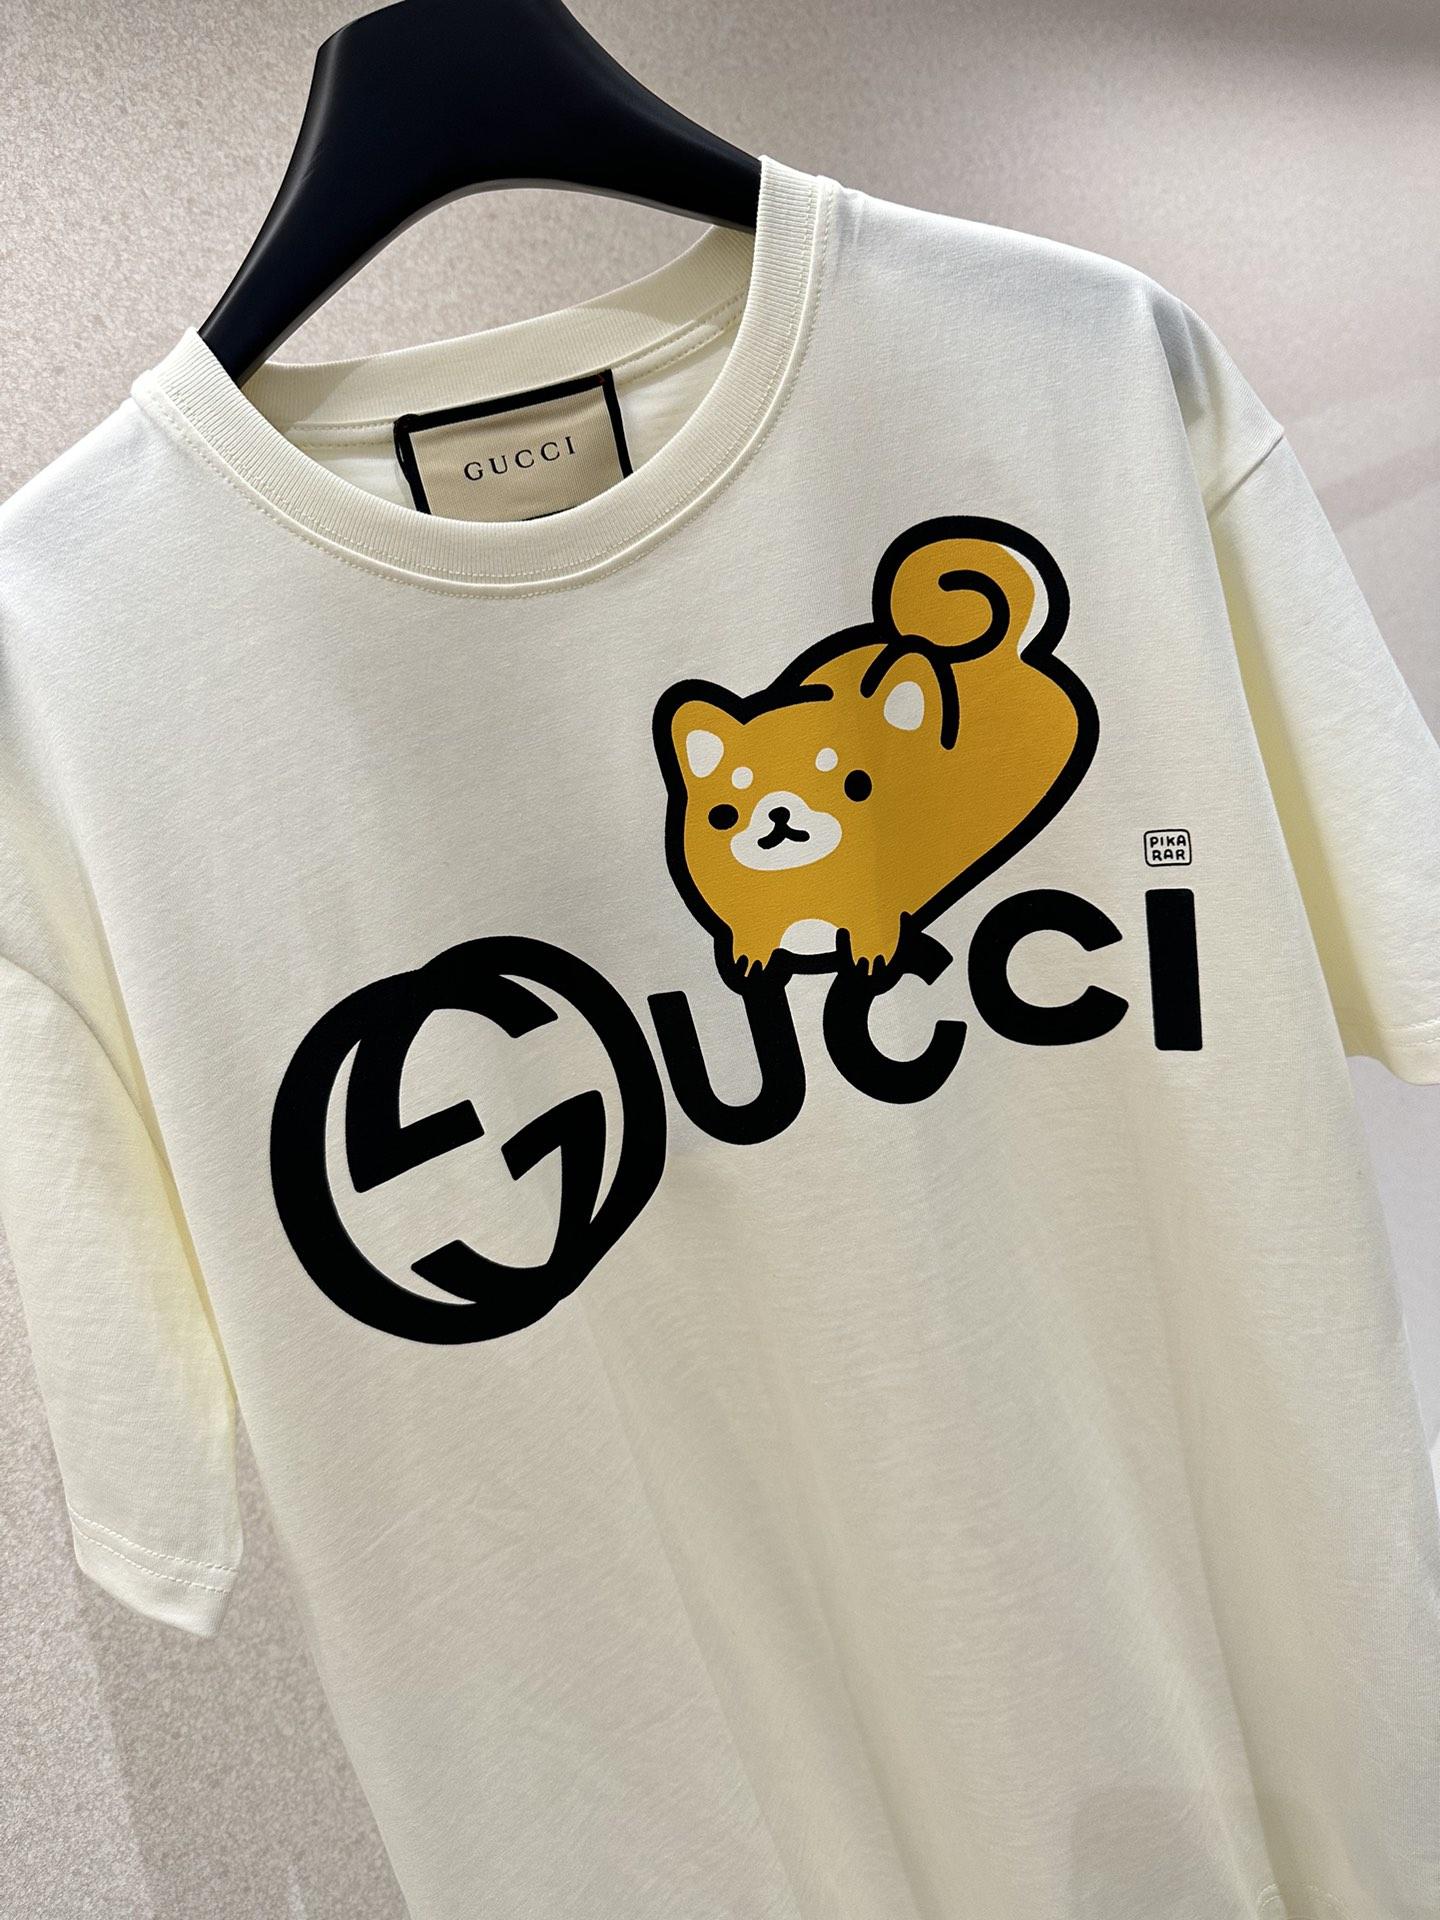 gucci-animal-print-cotton-t-shirt-7220_16845021115-1000